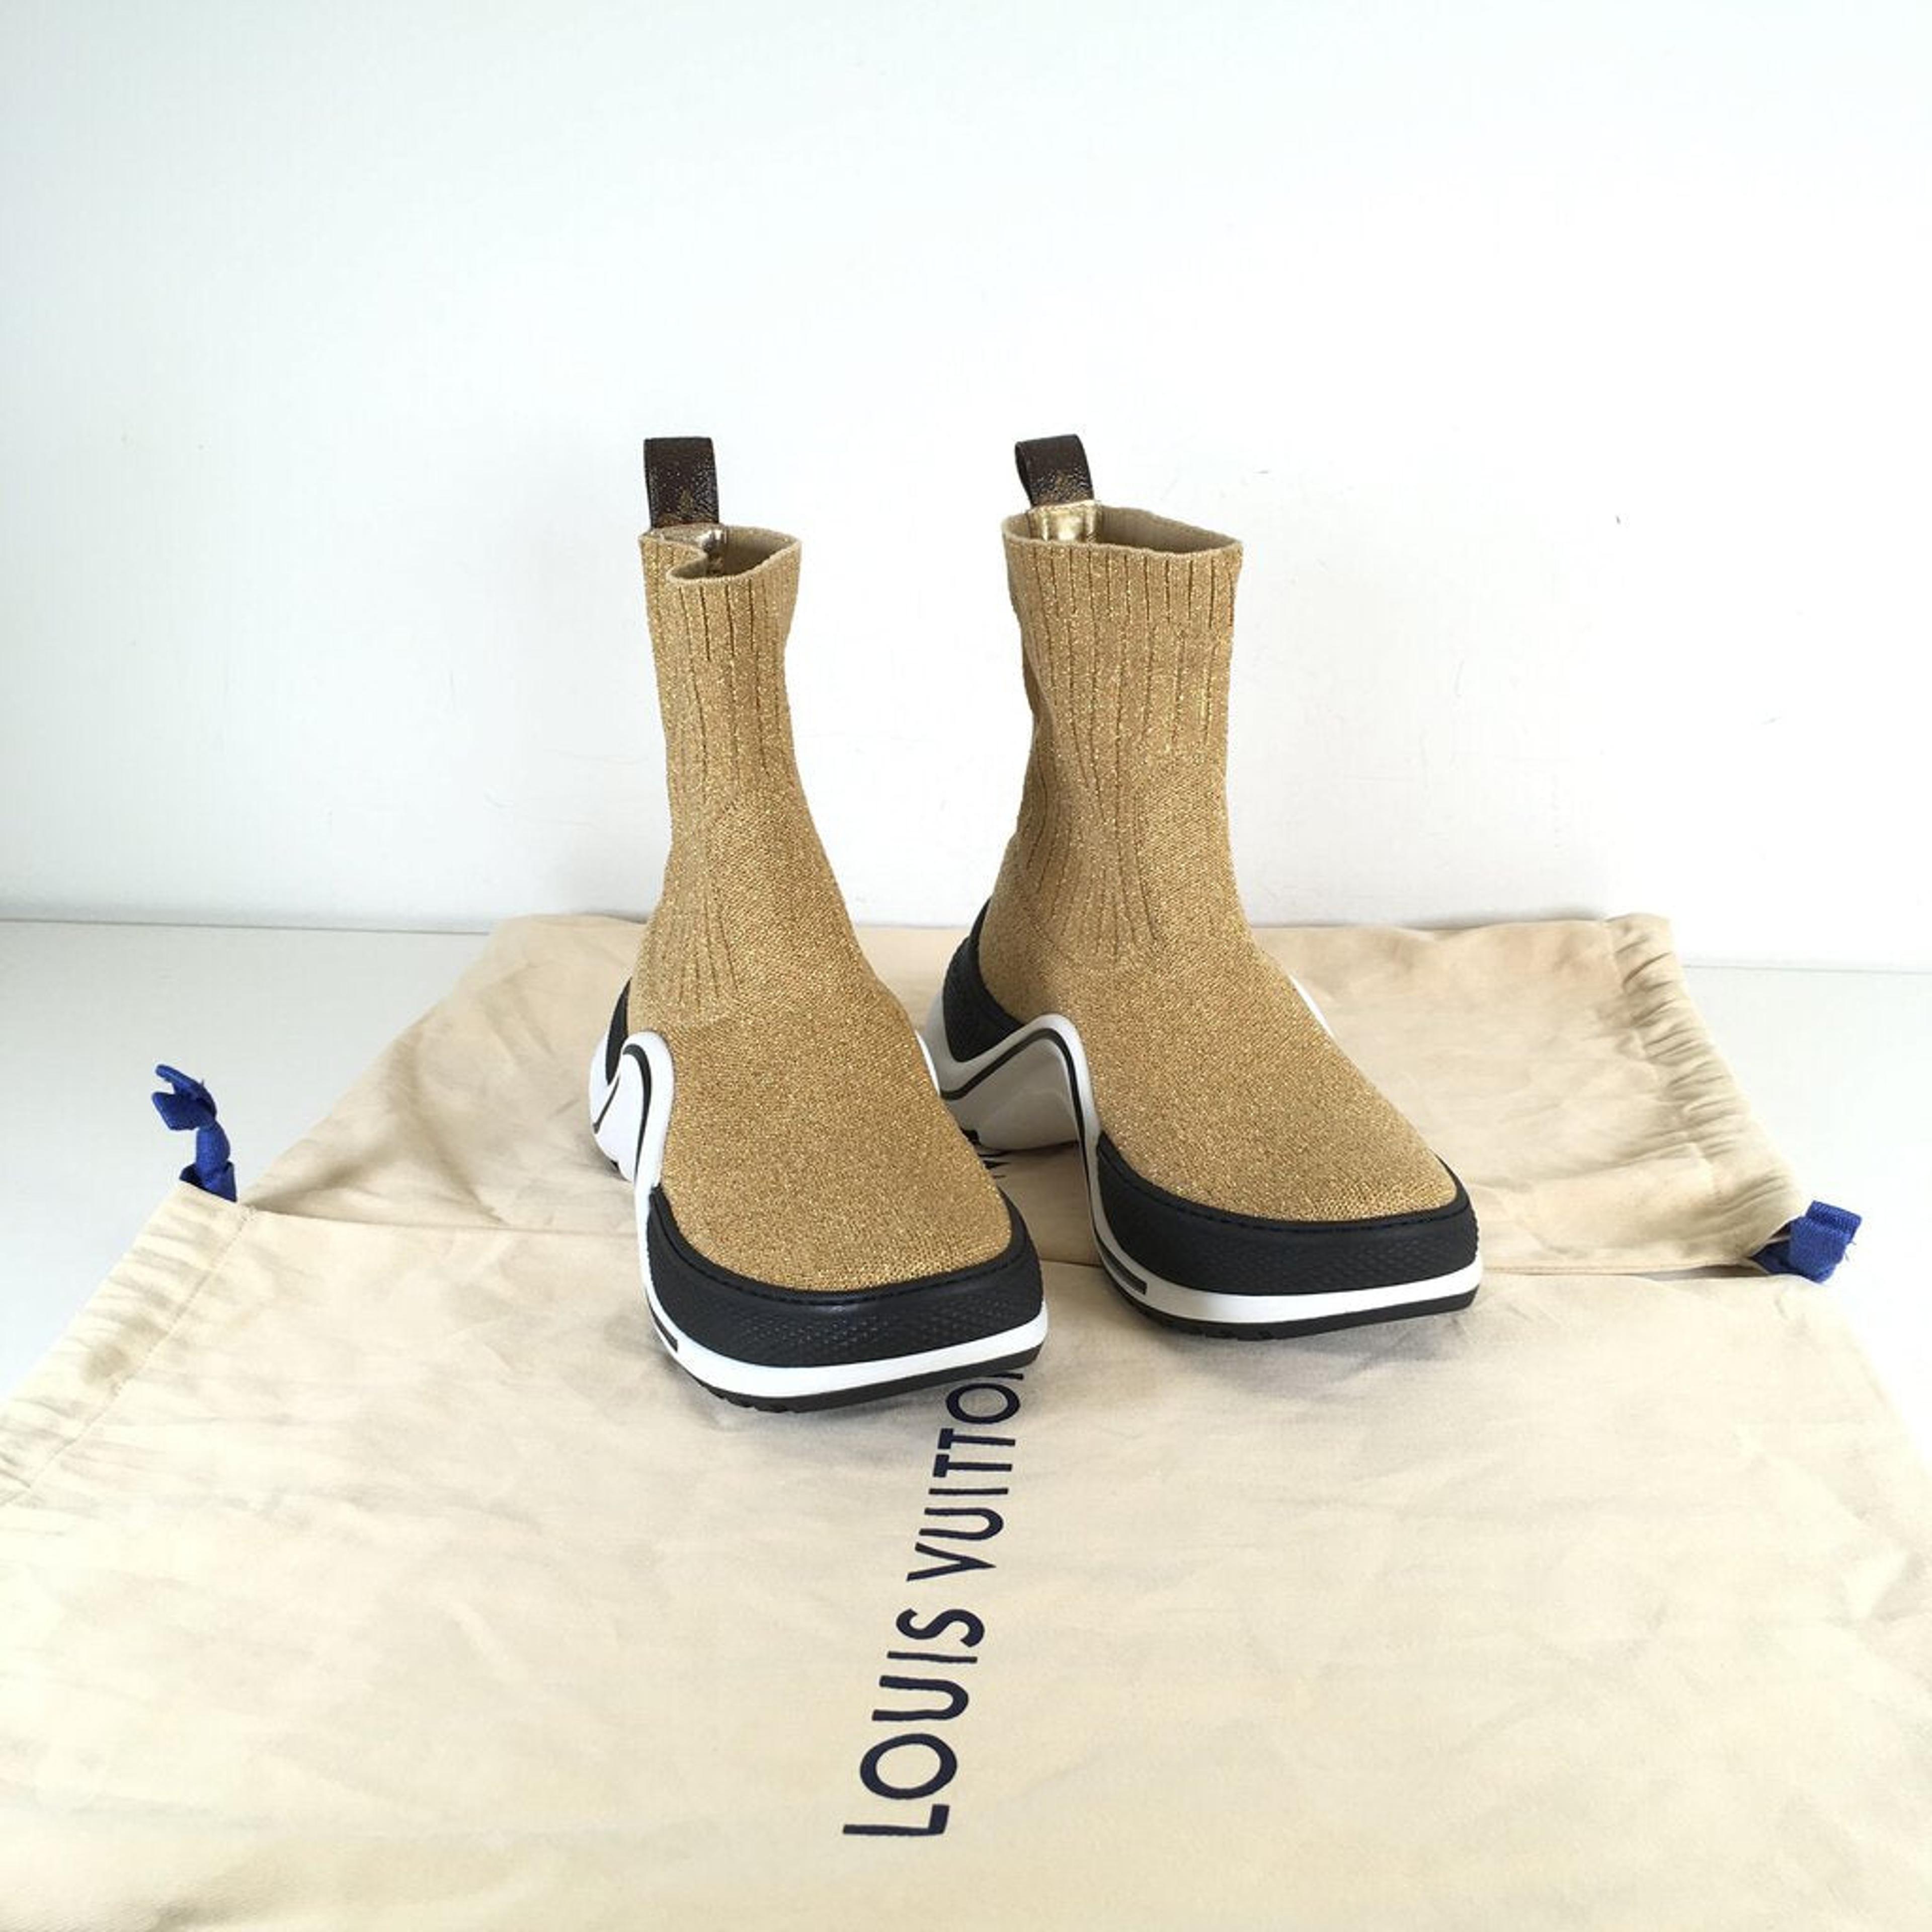 NTWRK - Louis Vuitton Archlight Sock Boots